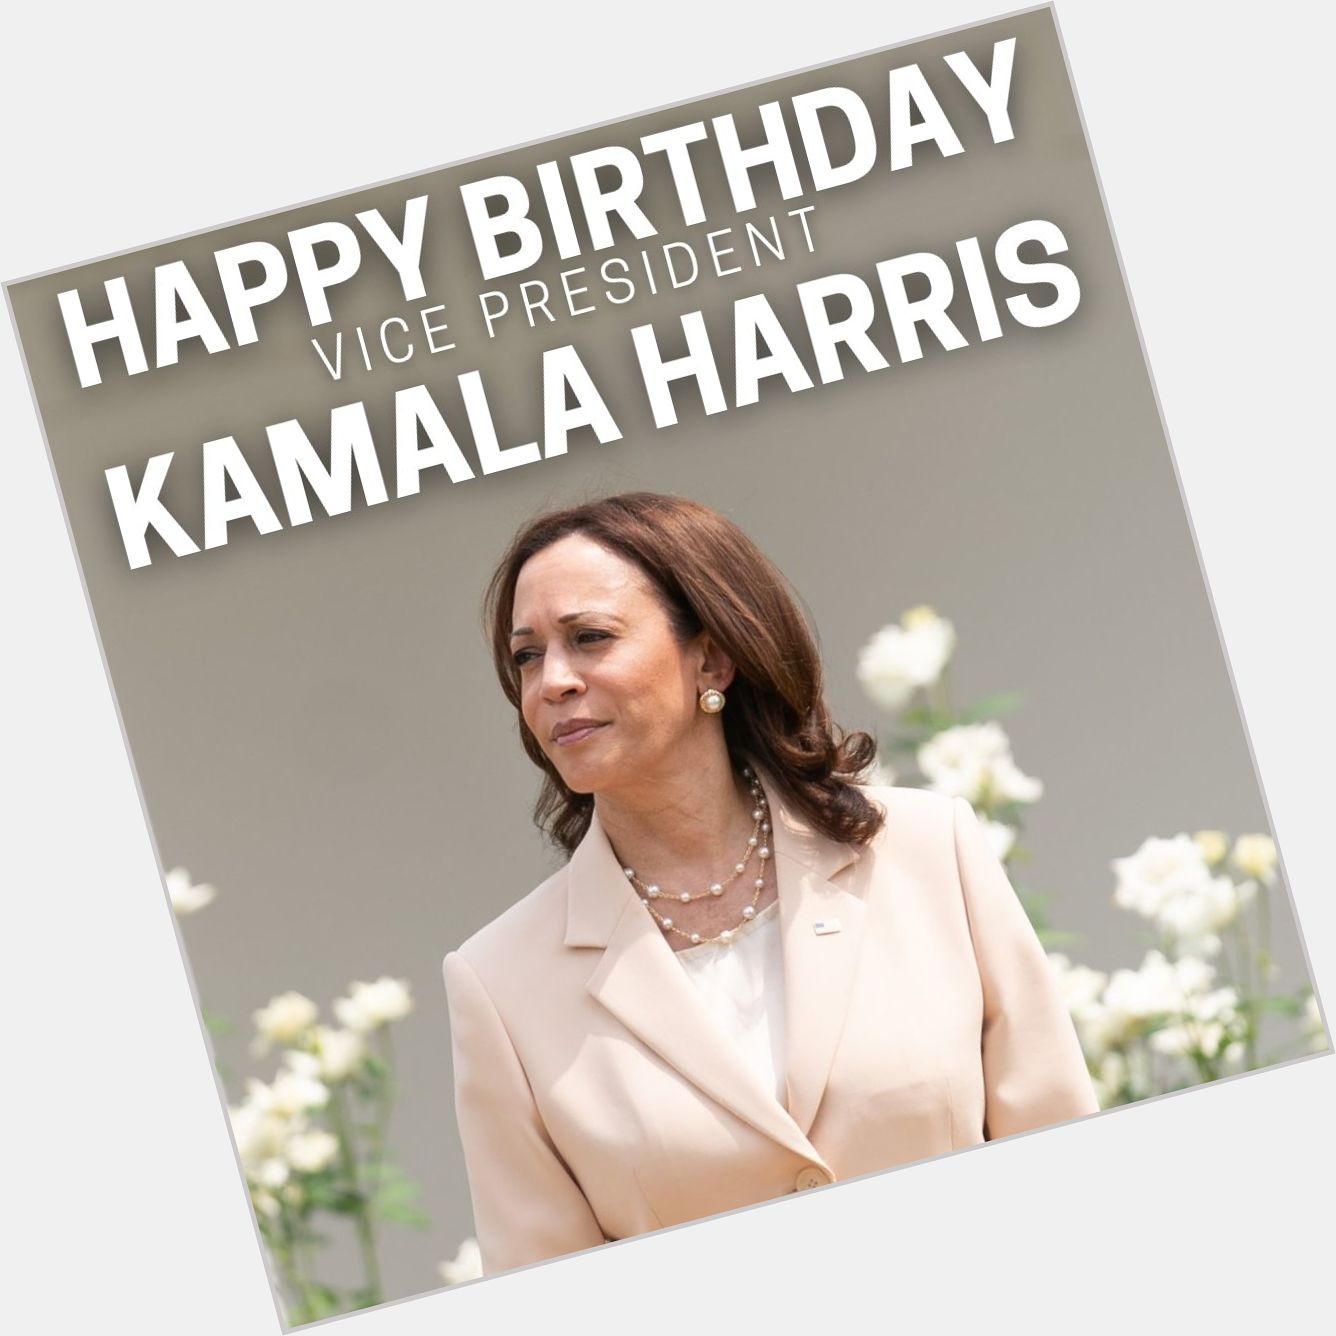 Happy Birthday Vice President Kamala Harris 